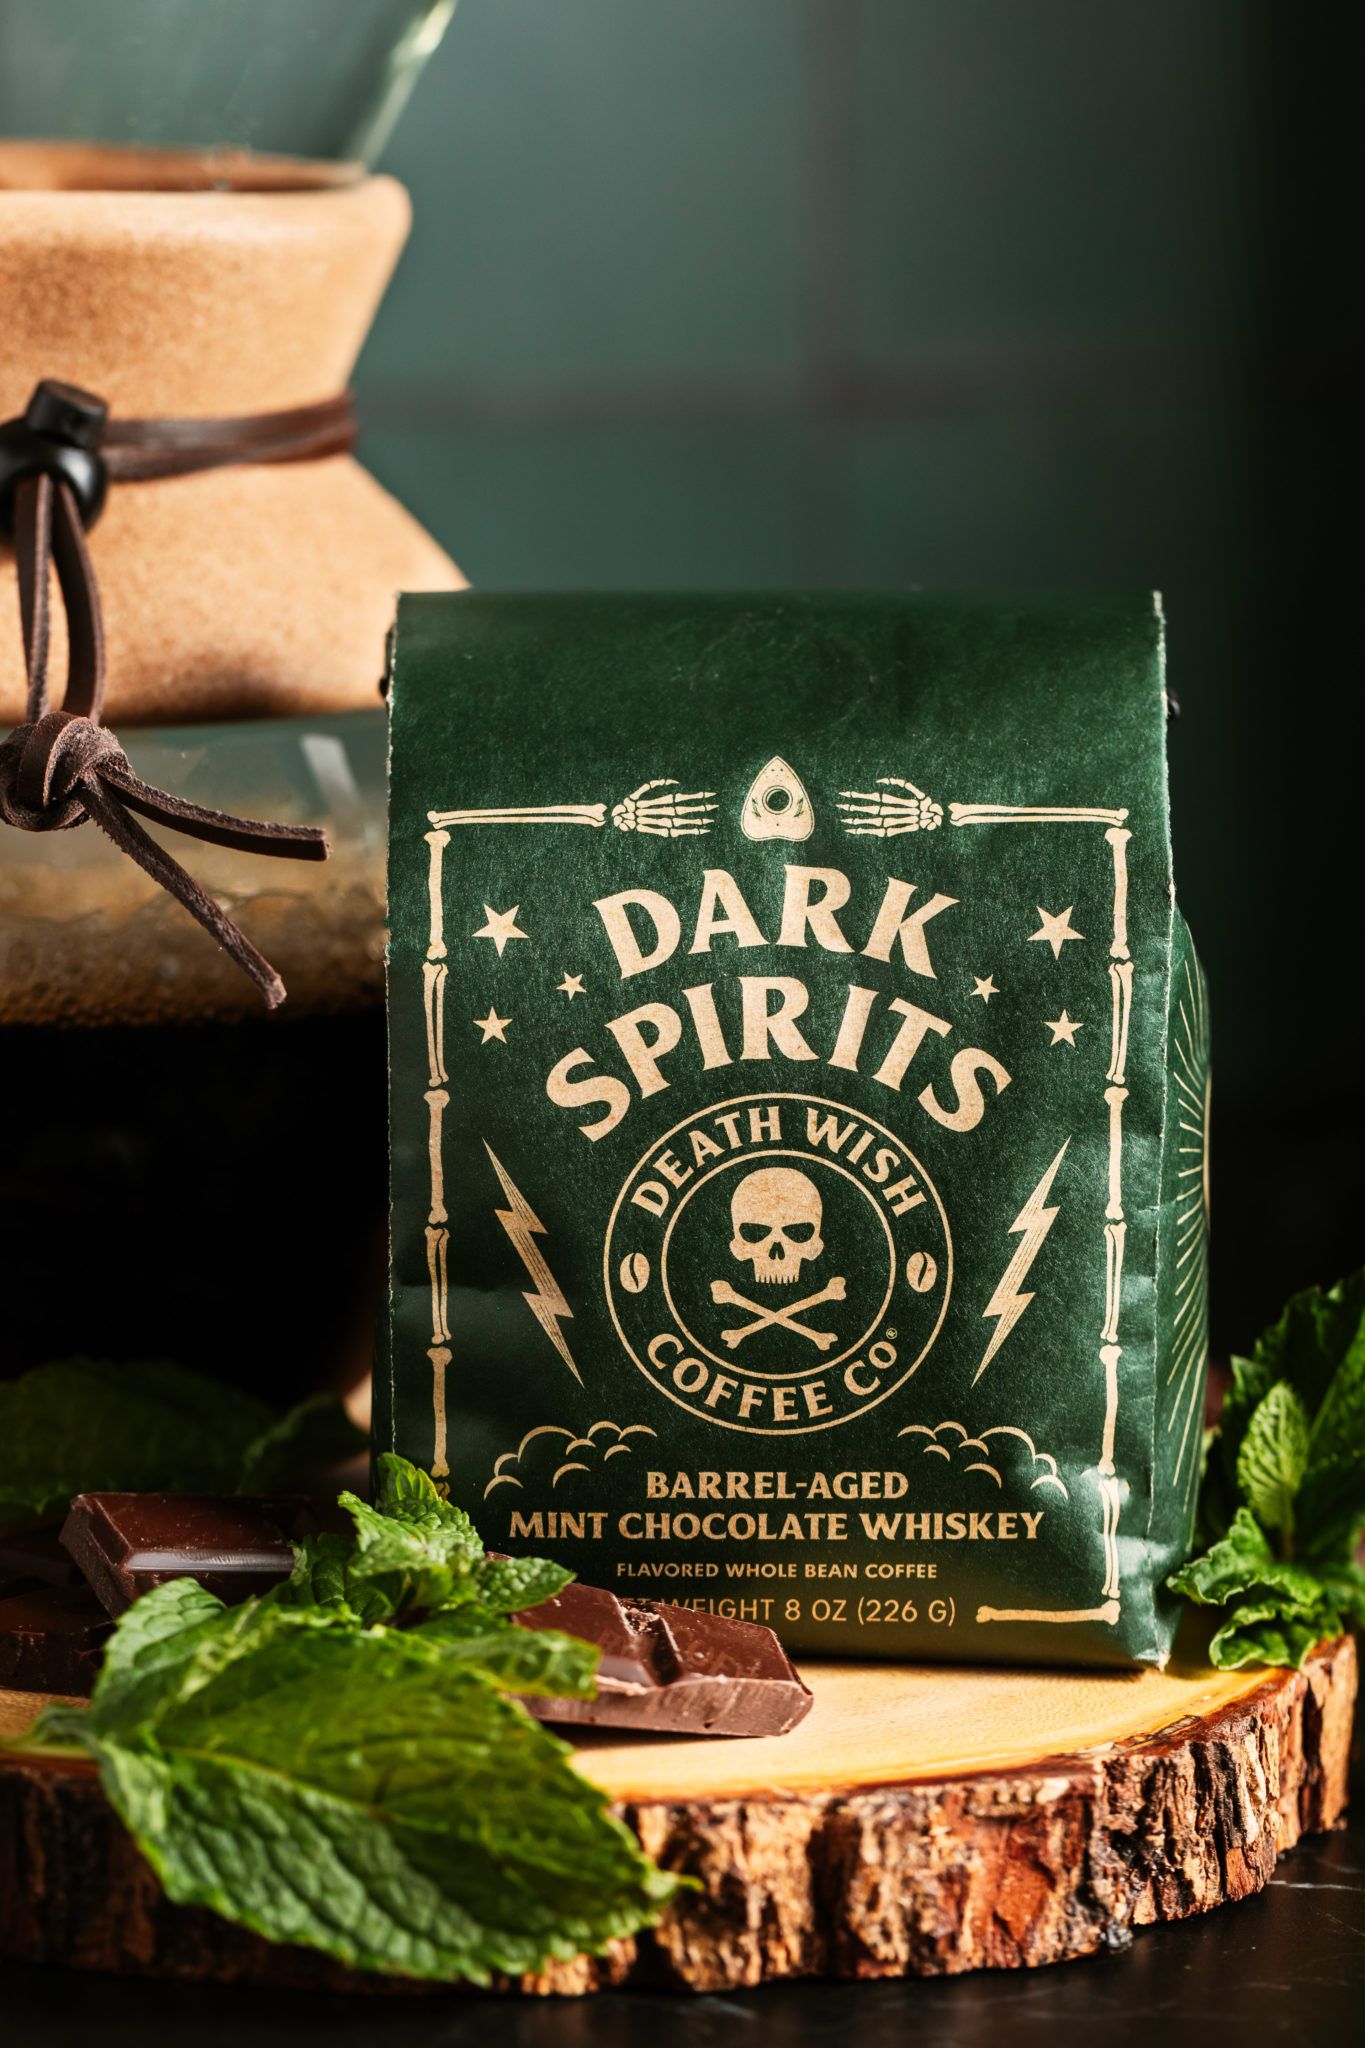 Death Wish Coffee Co. Launches Dark Spirits: Barrel-Aged Mint Chocolate Whiskey